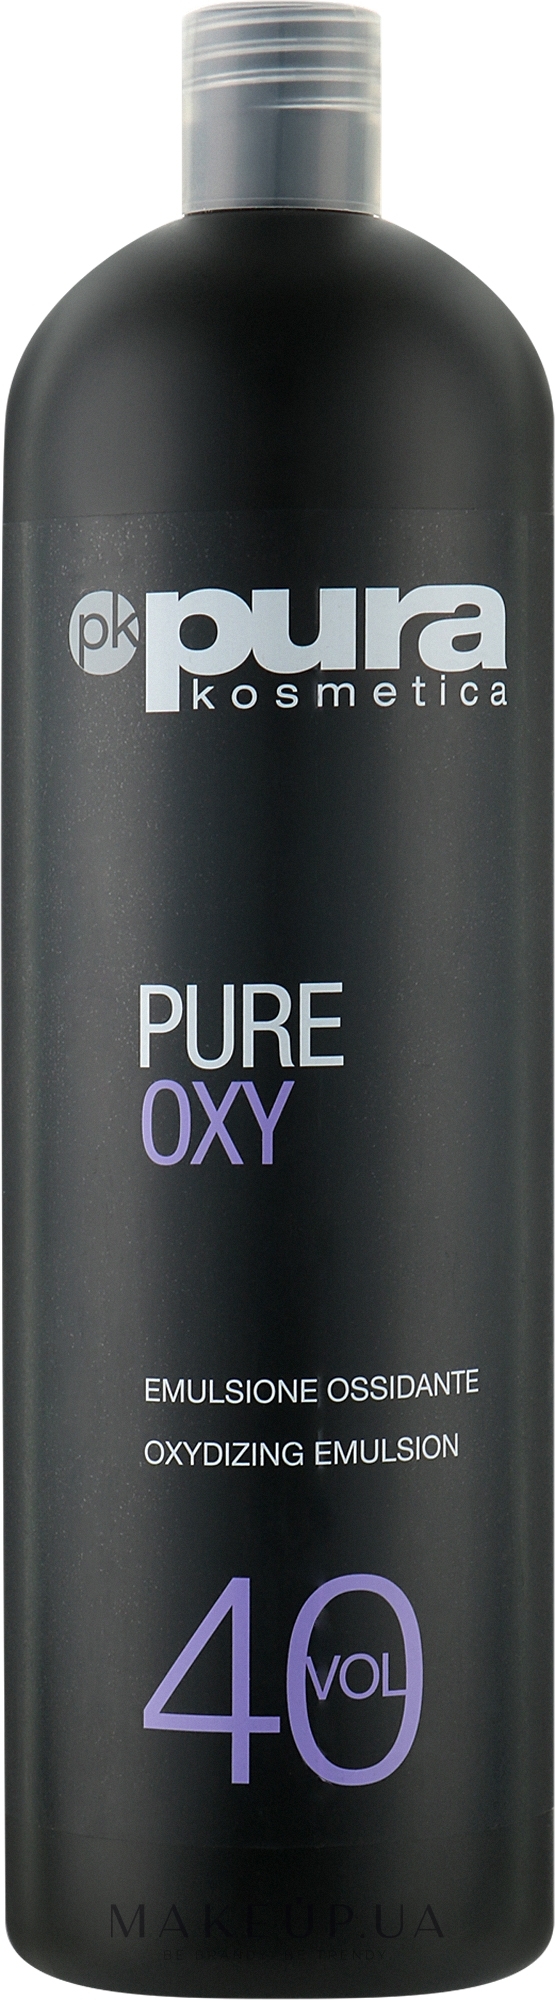 Окислювач для фарби 12% - Pura Kosmetica Pure Oxy 40 Vol — фото 1000ml